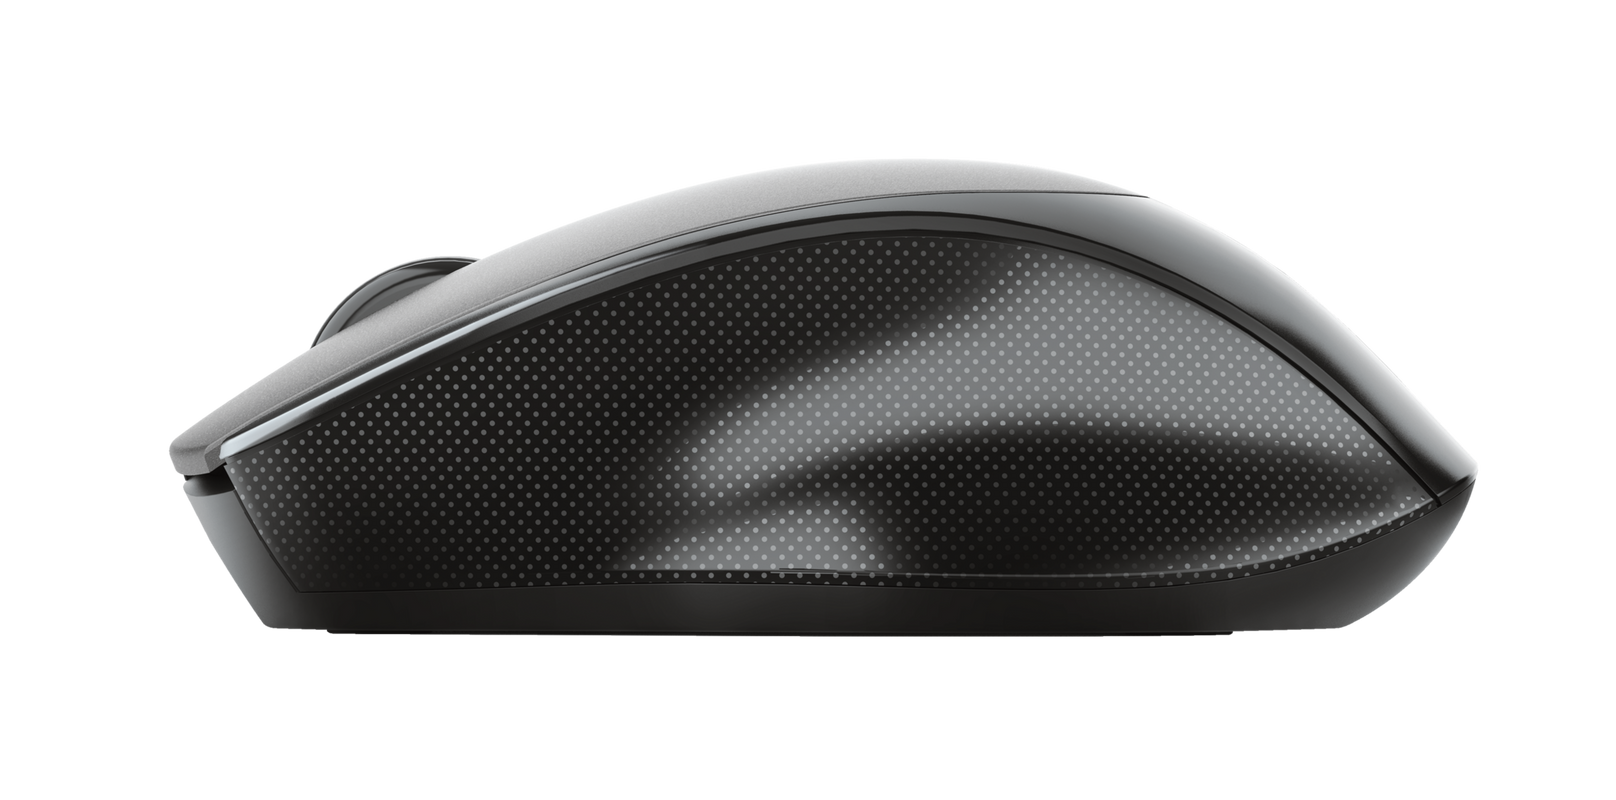 Zaya Rechargeable Wireless Mouse - black-Side